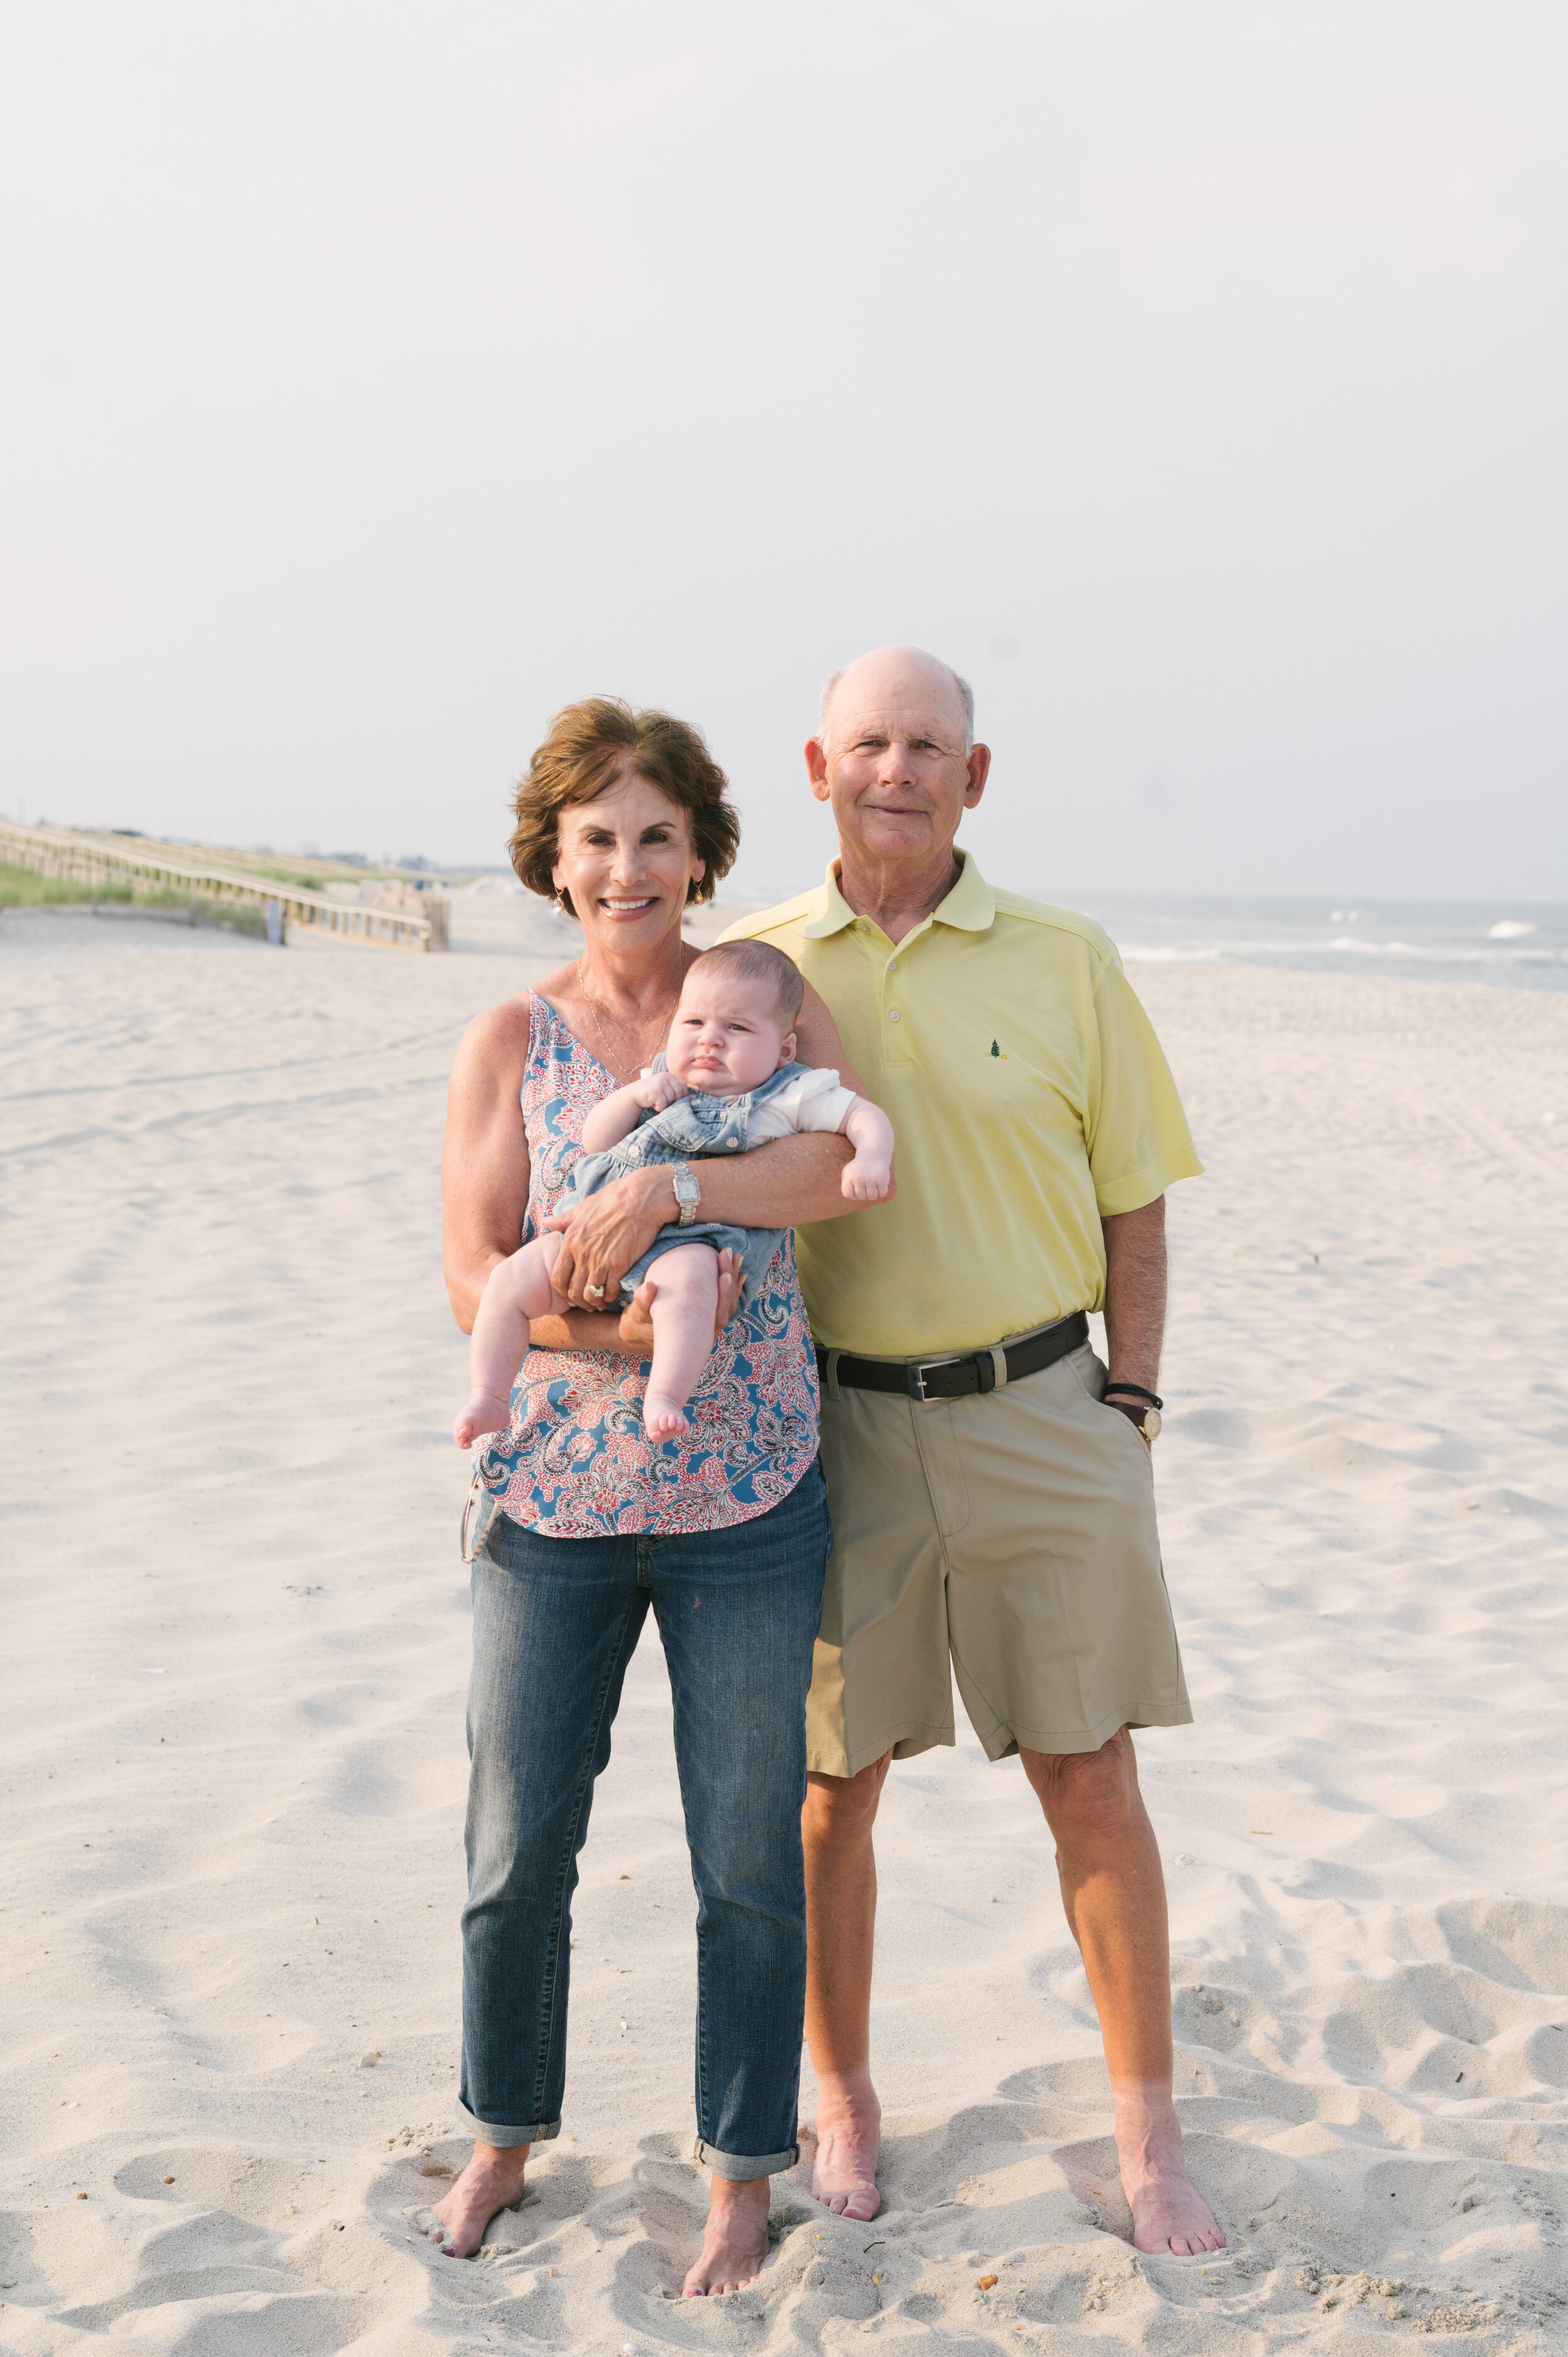 Beach photo ideas: Grandparents holding baby on beach during family beach photos | NKB Photo